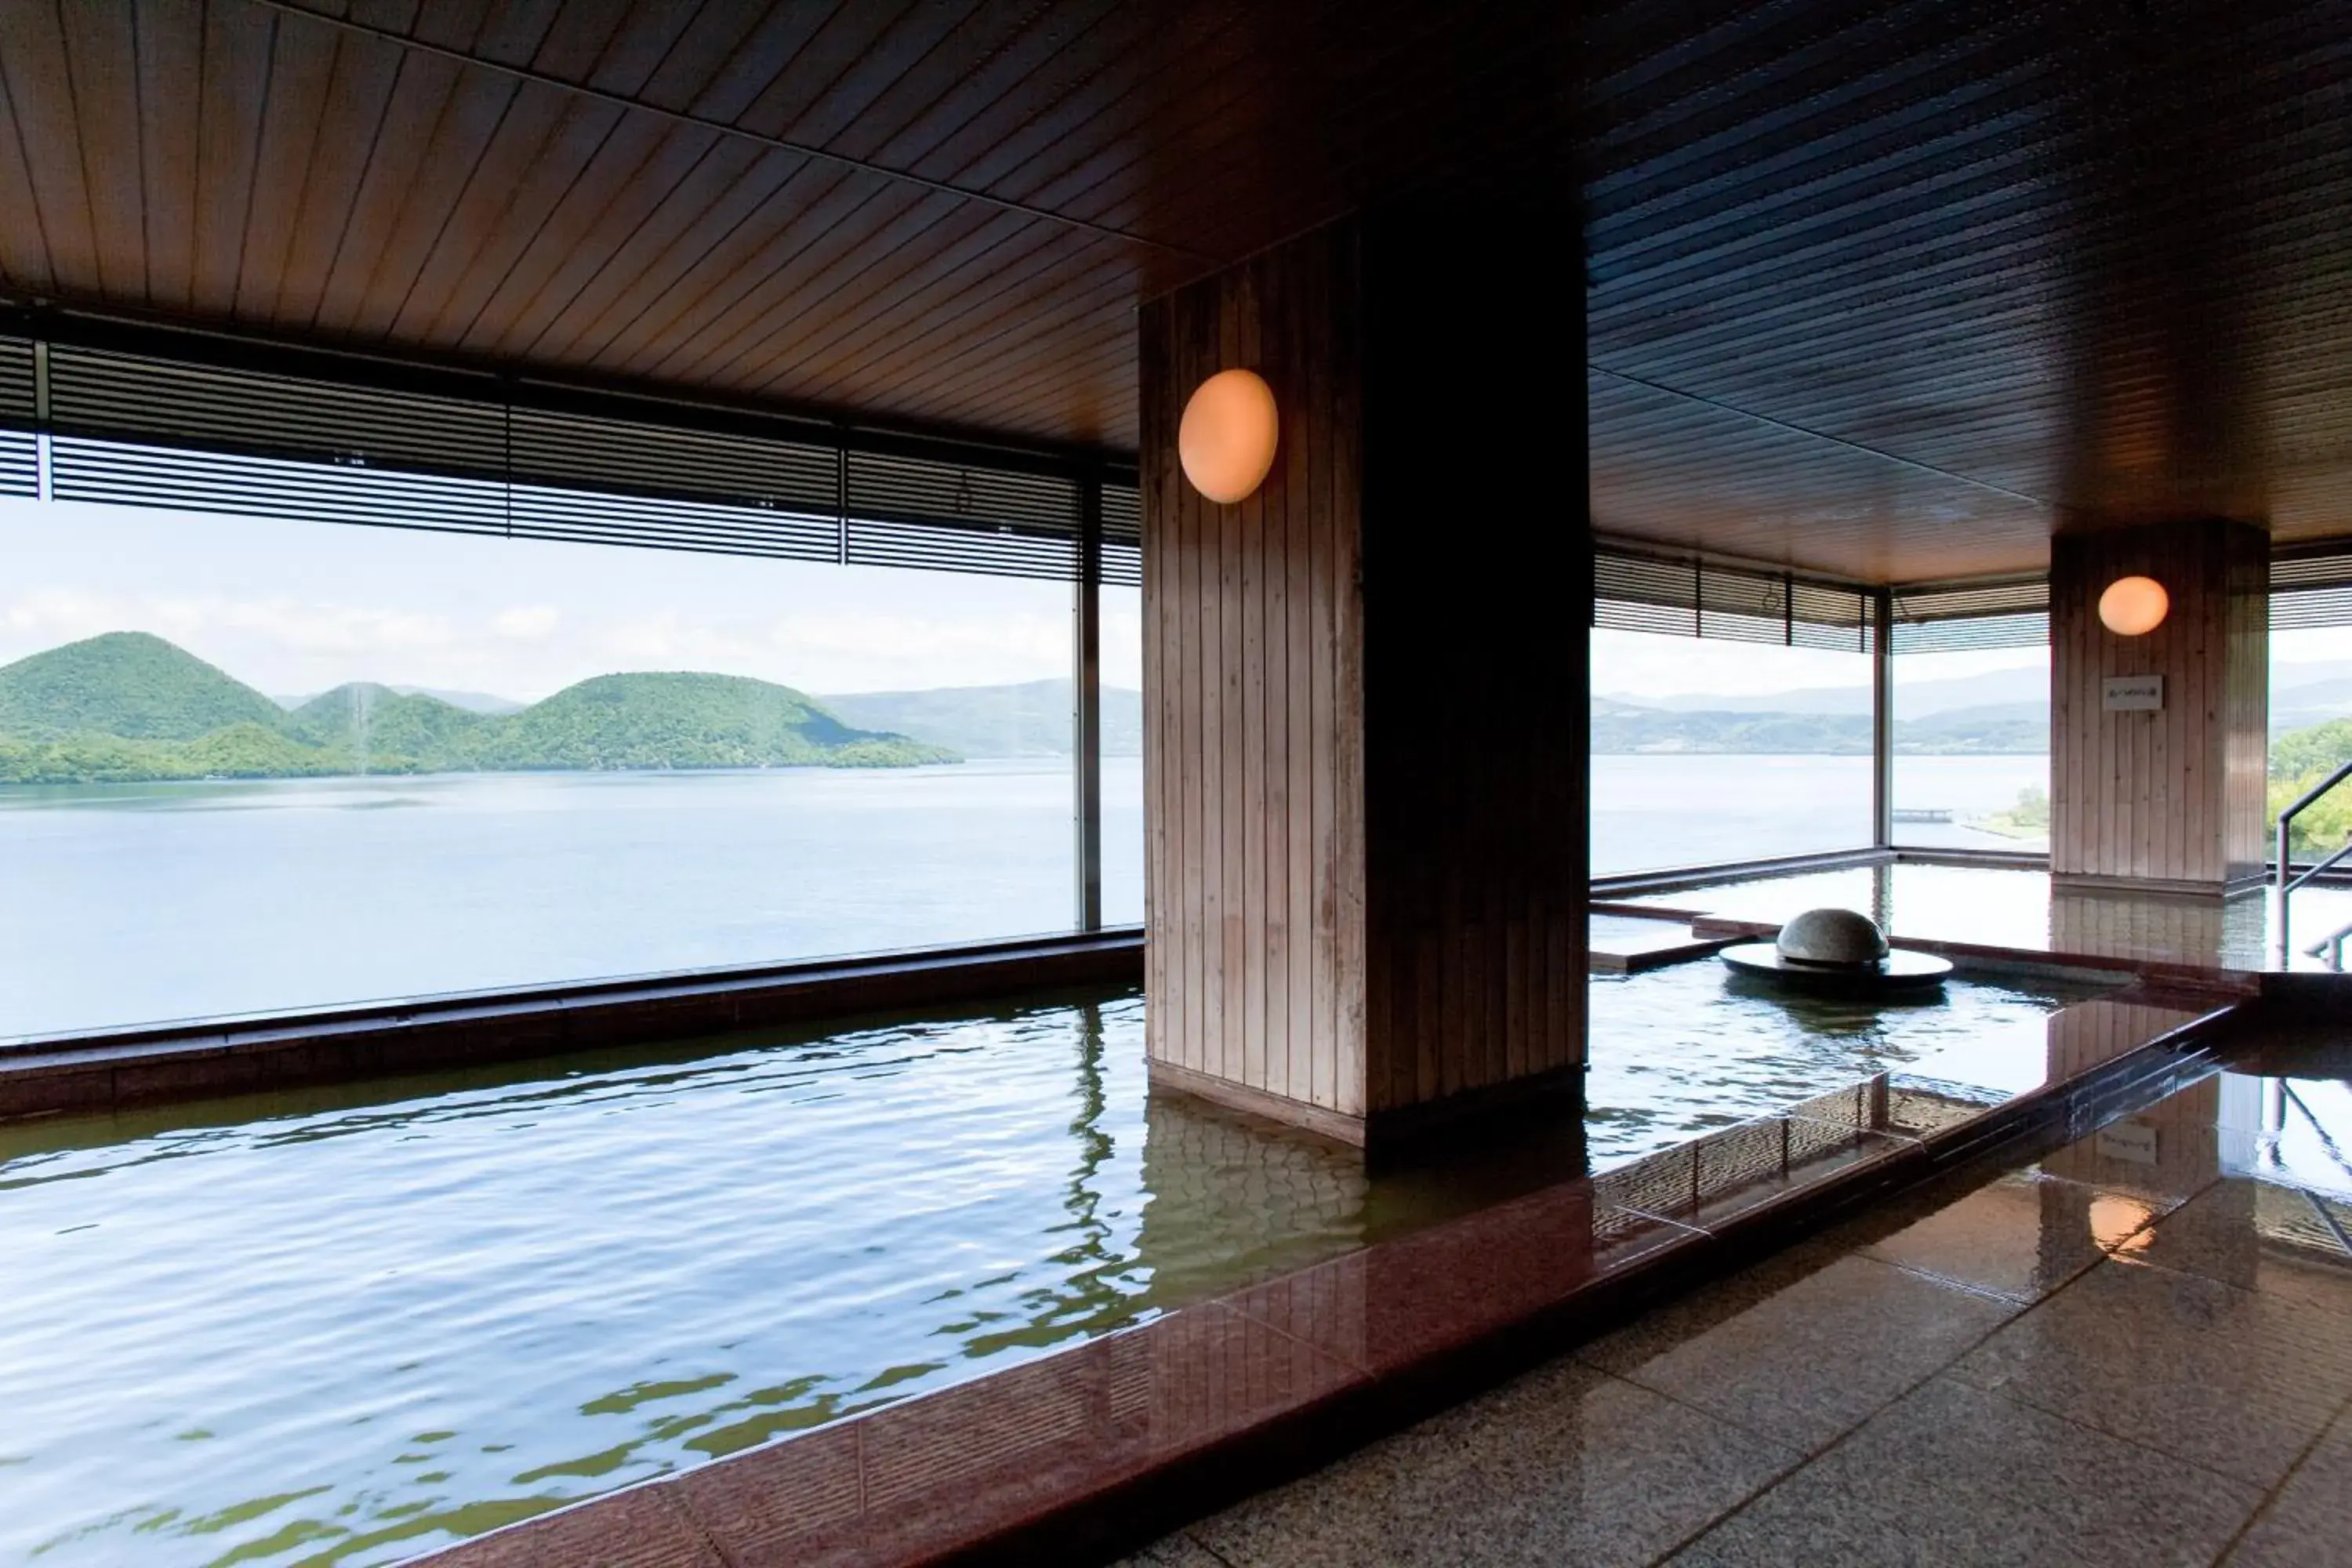 Hot Spring Bath, River View in Toya Kohantei Hotel